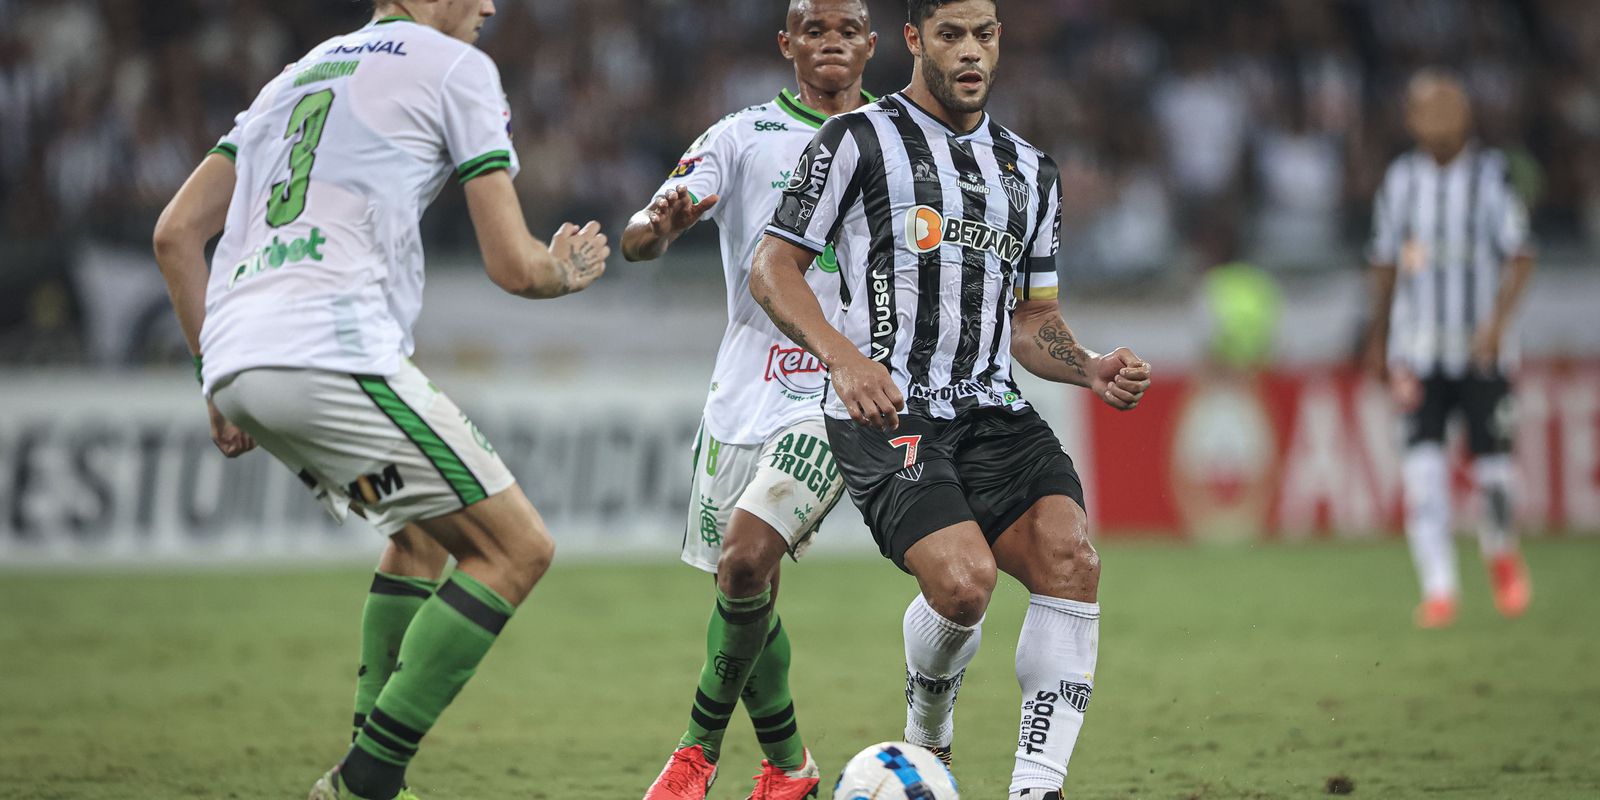 Minas Gerais classic ends in a tie in Libertadores